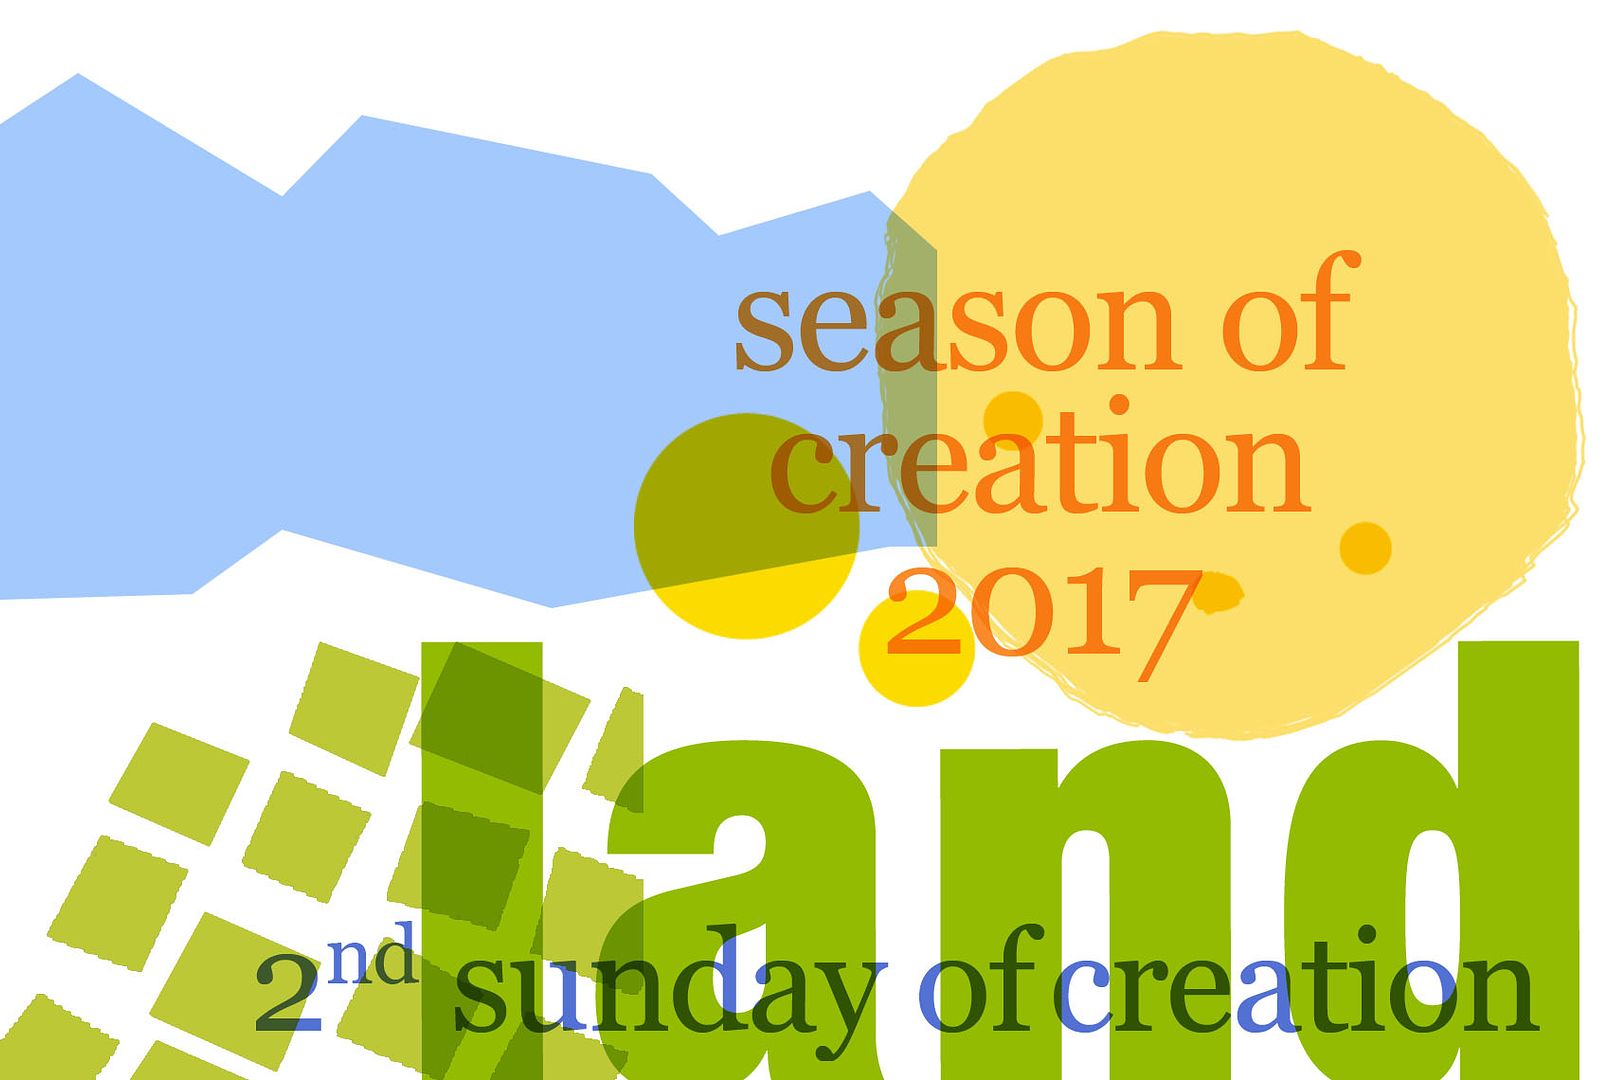 Season of Creation 2A, Land Sunday